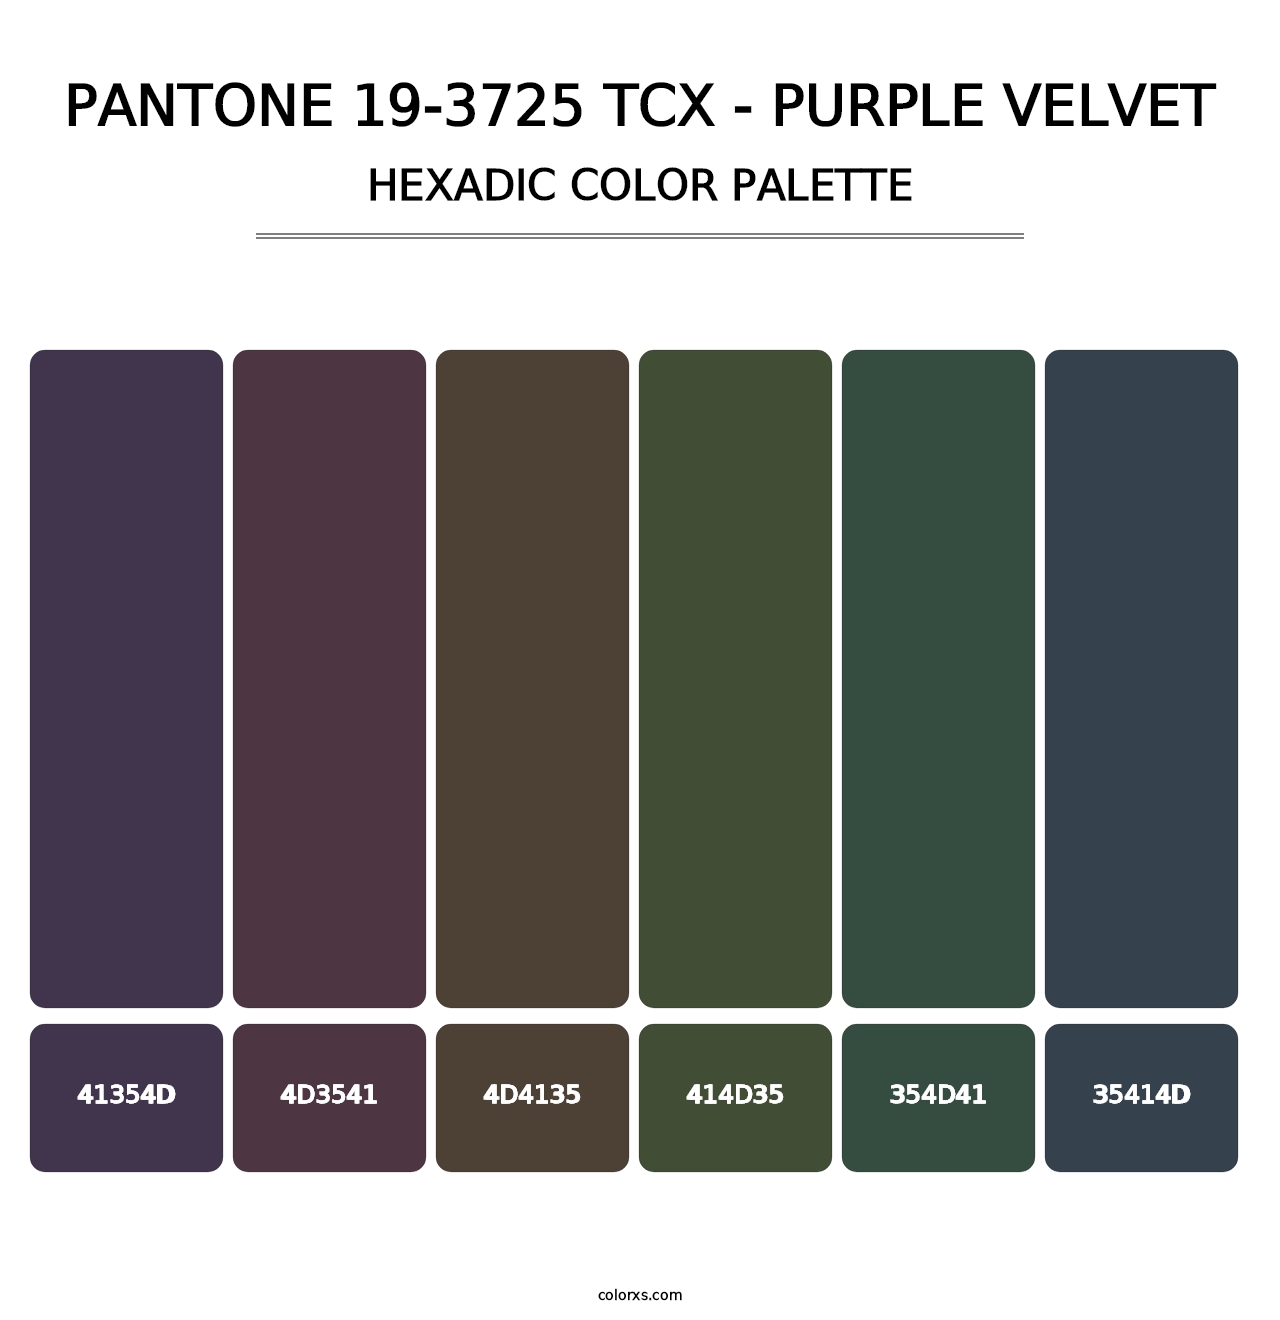 PANTONE 19-3725 TCX - Purple Velvet - Hexadic Color Palette